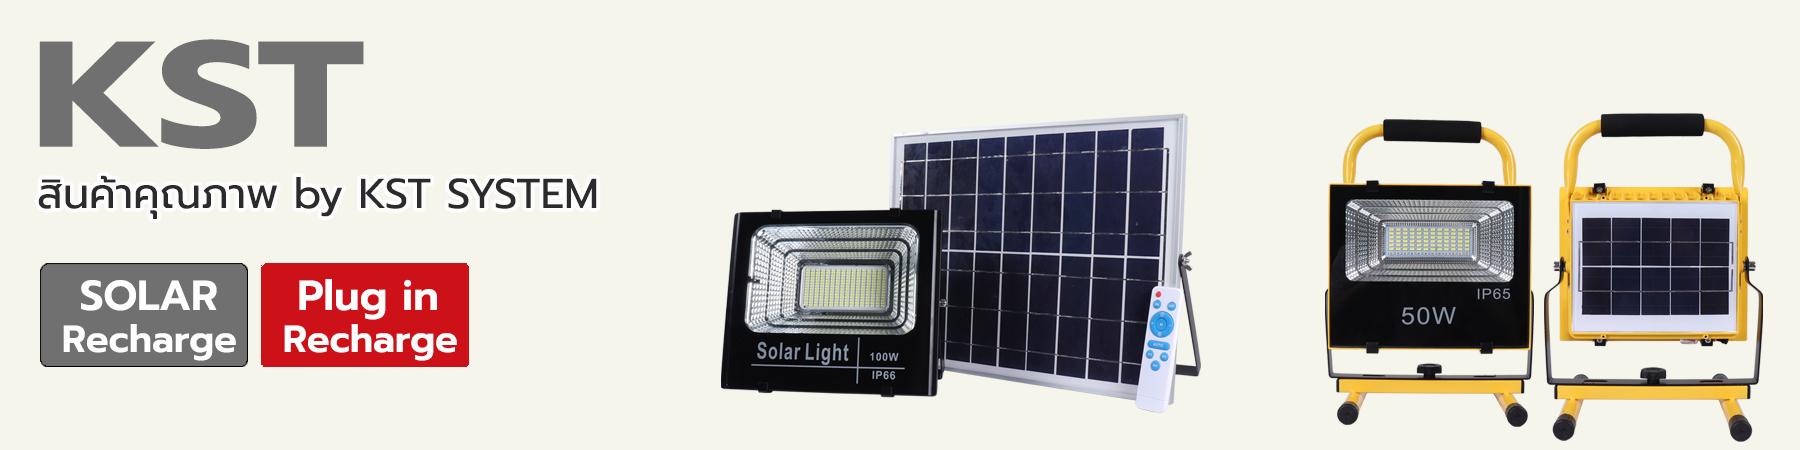 SpotLight Solar Cell, SpotLight Solar Panel, Solar LED Flood Light, SpotLight Solar Cell, สปอร์ตไลท์พลังงานแสงอาทิตย์, ไฟสนามโซล่าเซลล์, สปอร์ตไลท์โซล่าเซลล์, โคมไฟโซล่าเซลล์, ไฟสวนโซล่าเซลล์, ไฟถนนโซล่าเซลล์